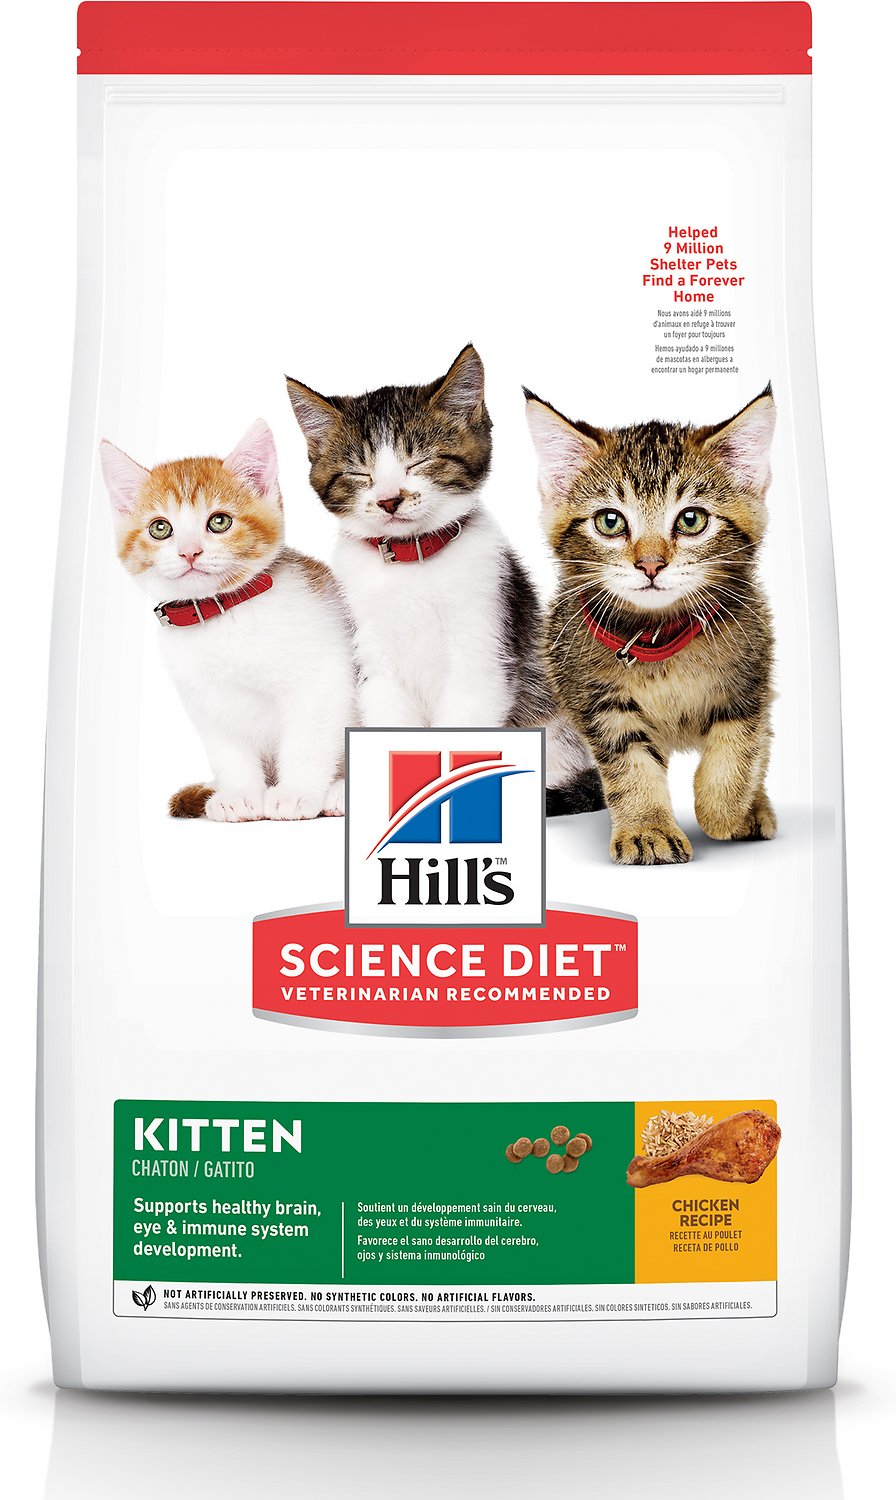 Hill’s Science Diet Kitten Chicken Recipe Dry Cat Food